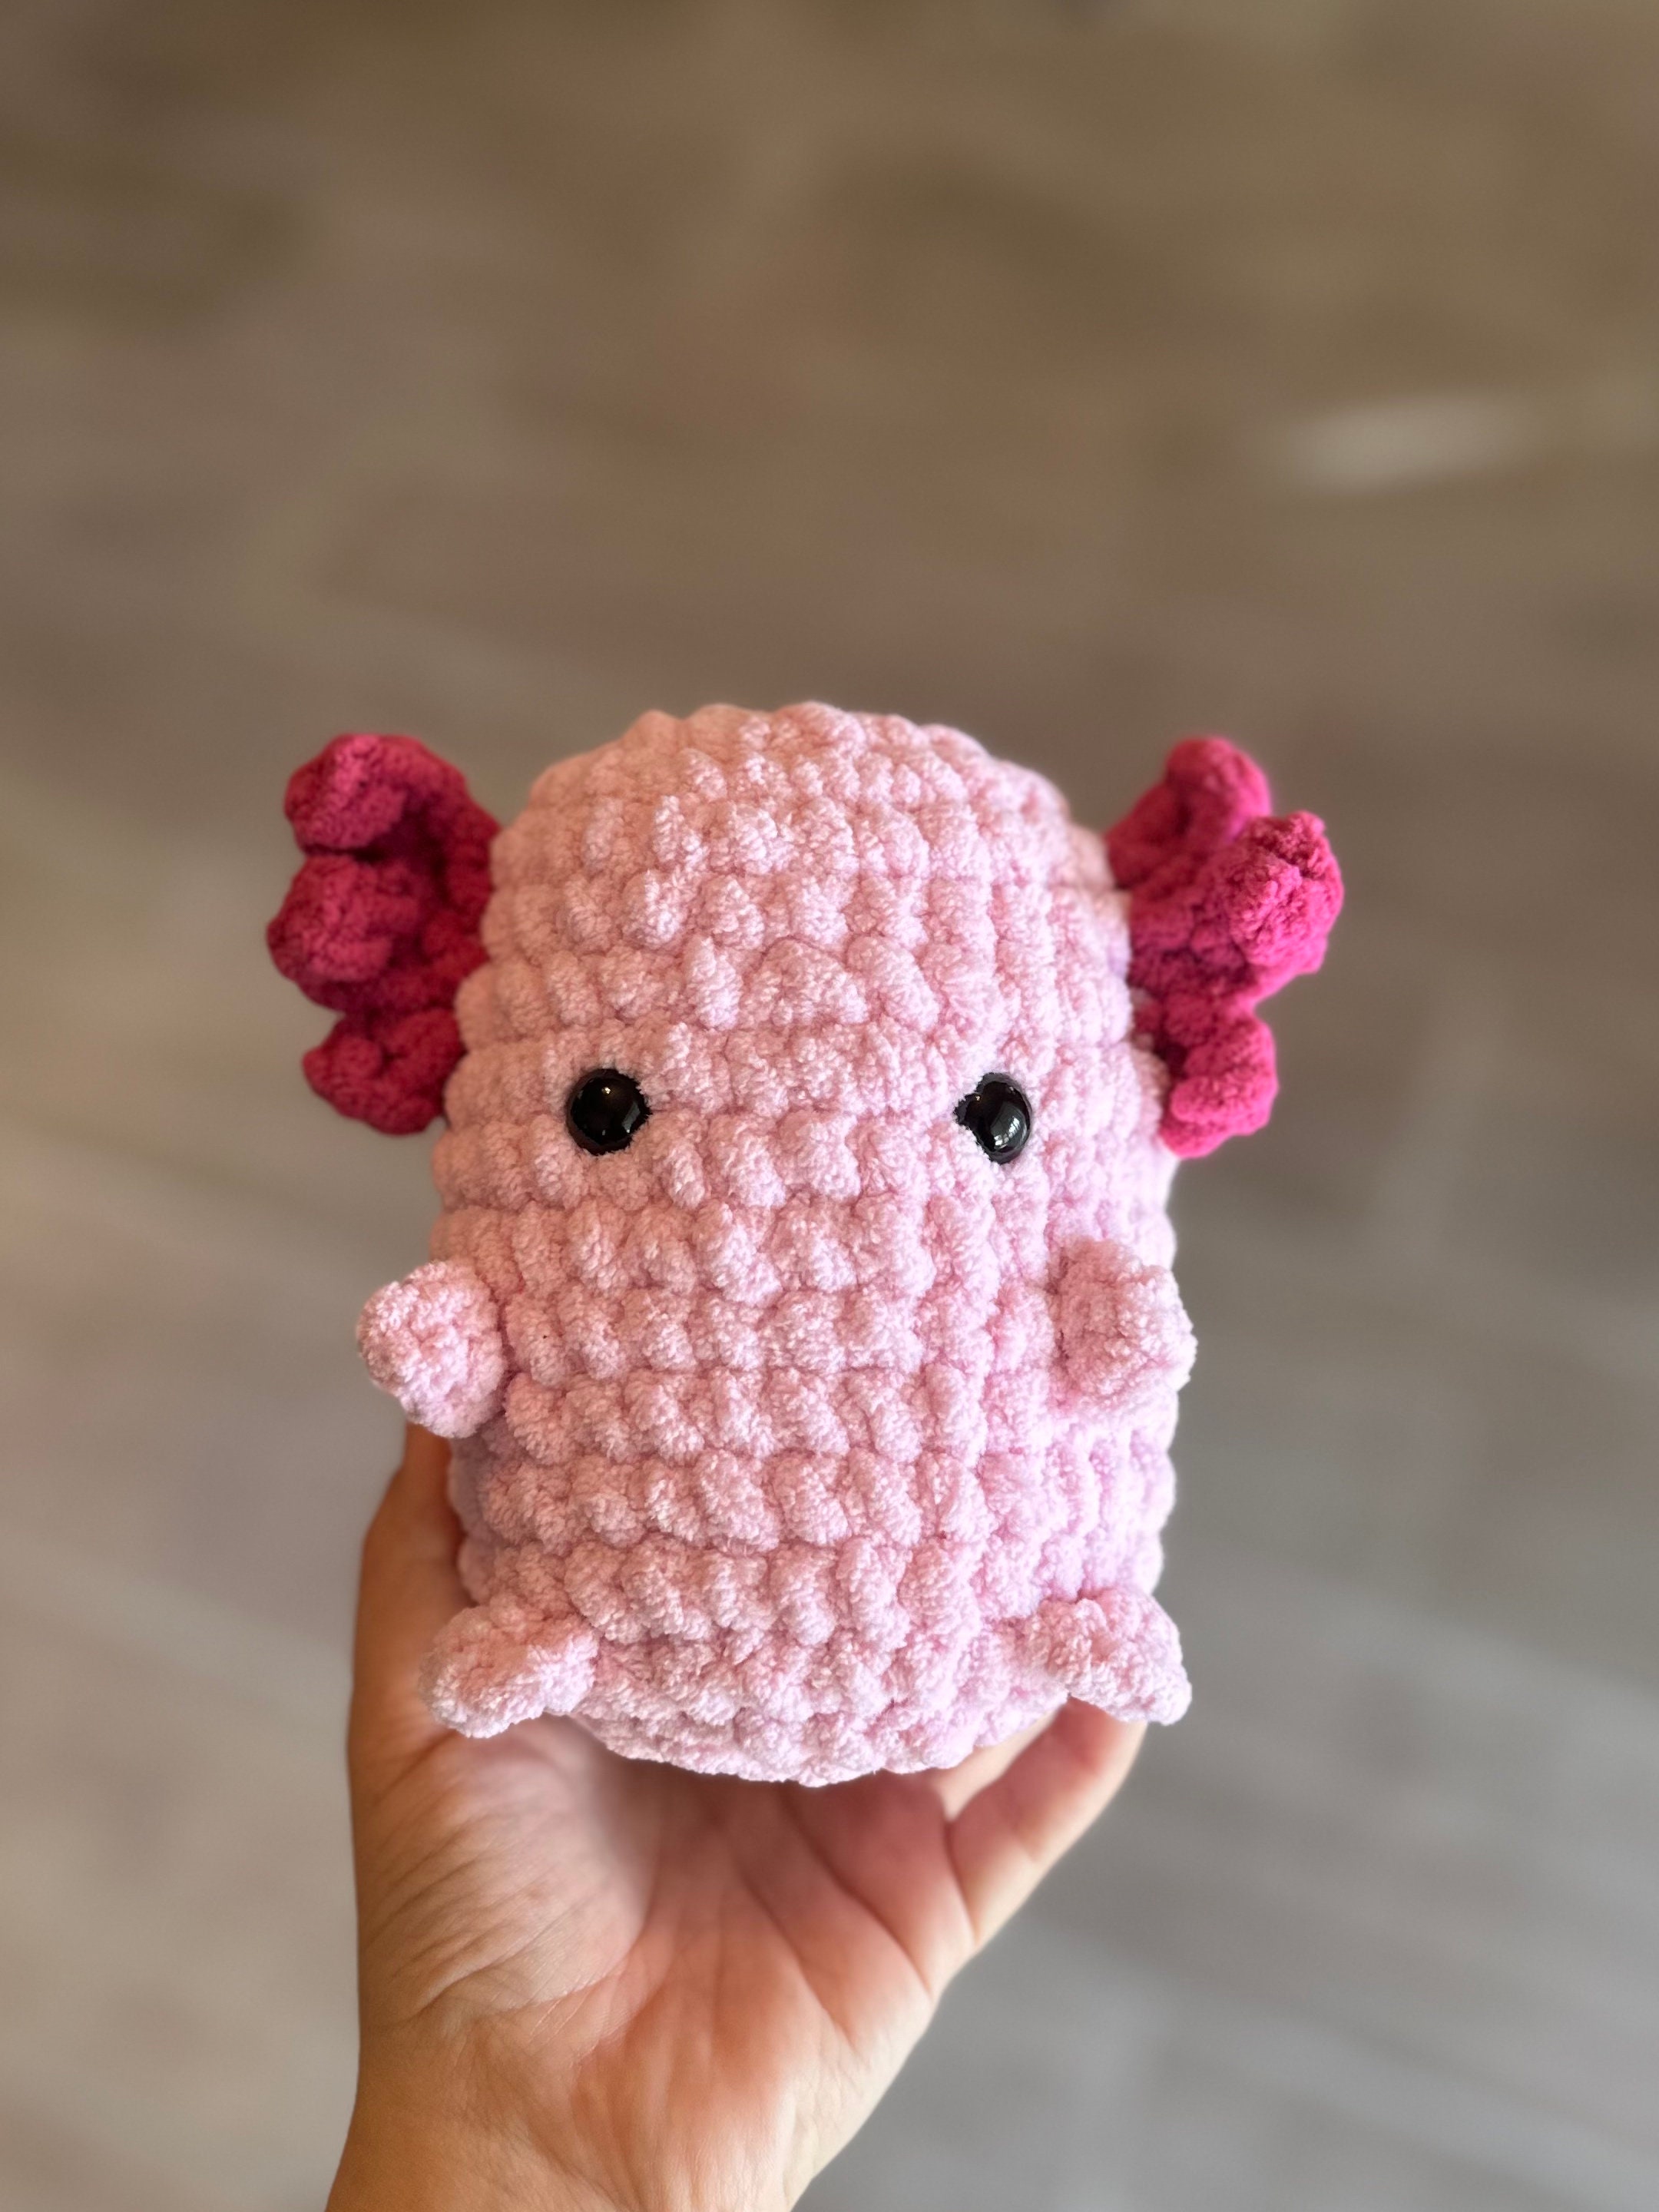 Crochet Axolotl Plushie/ Axolotl Plush Toy/ Amigurumi/ Cute Stuff Animal/  Water Dragon/ Walking Fish/ Kawaii Plushie/handmade Toy for Gift 